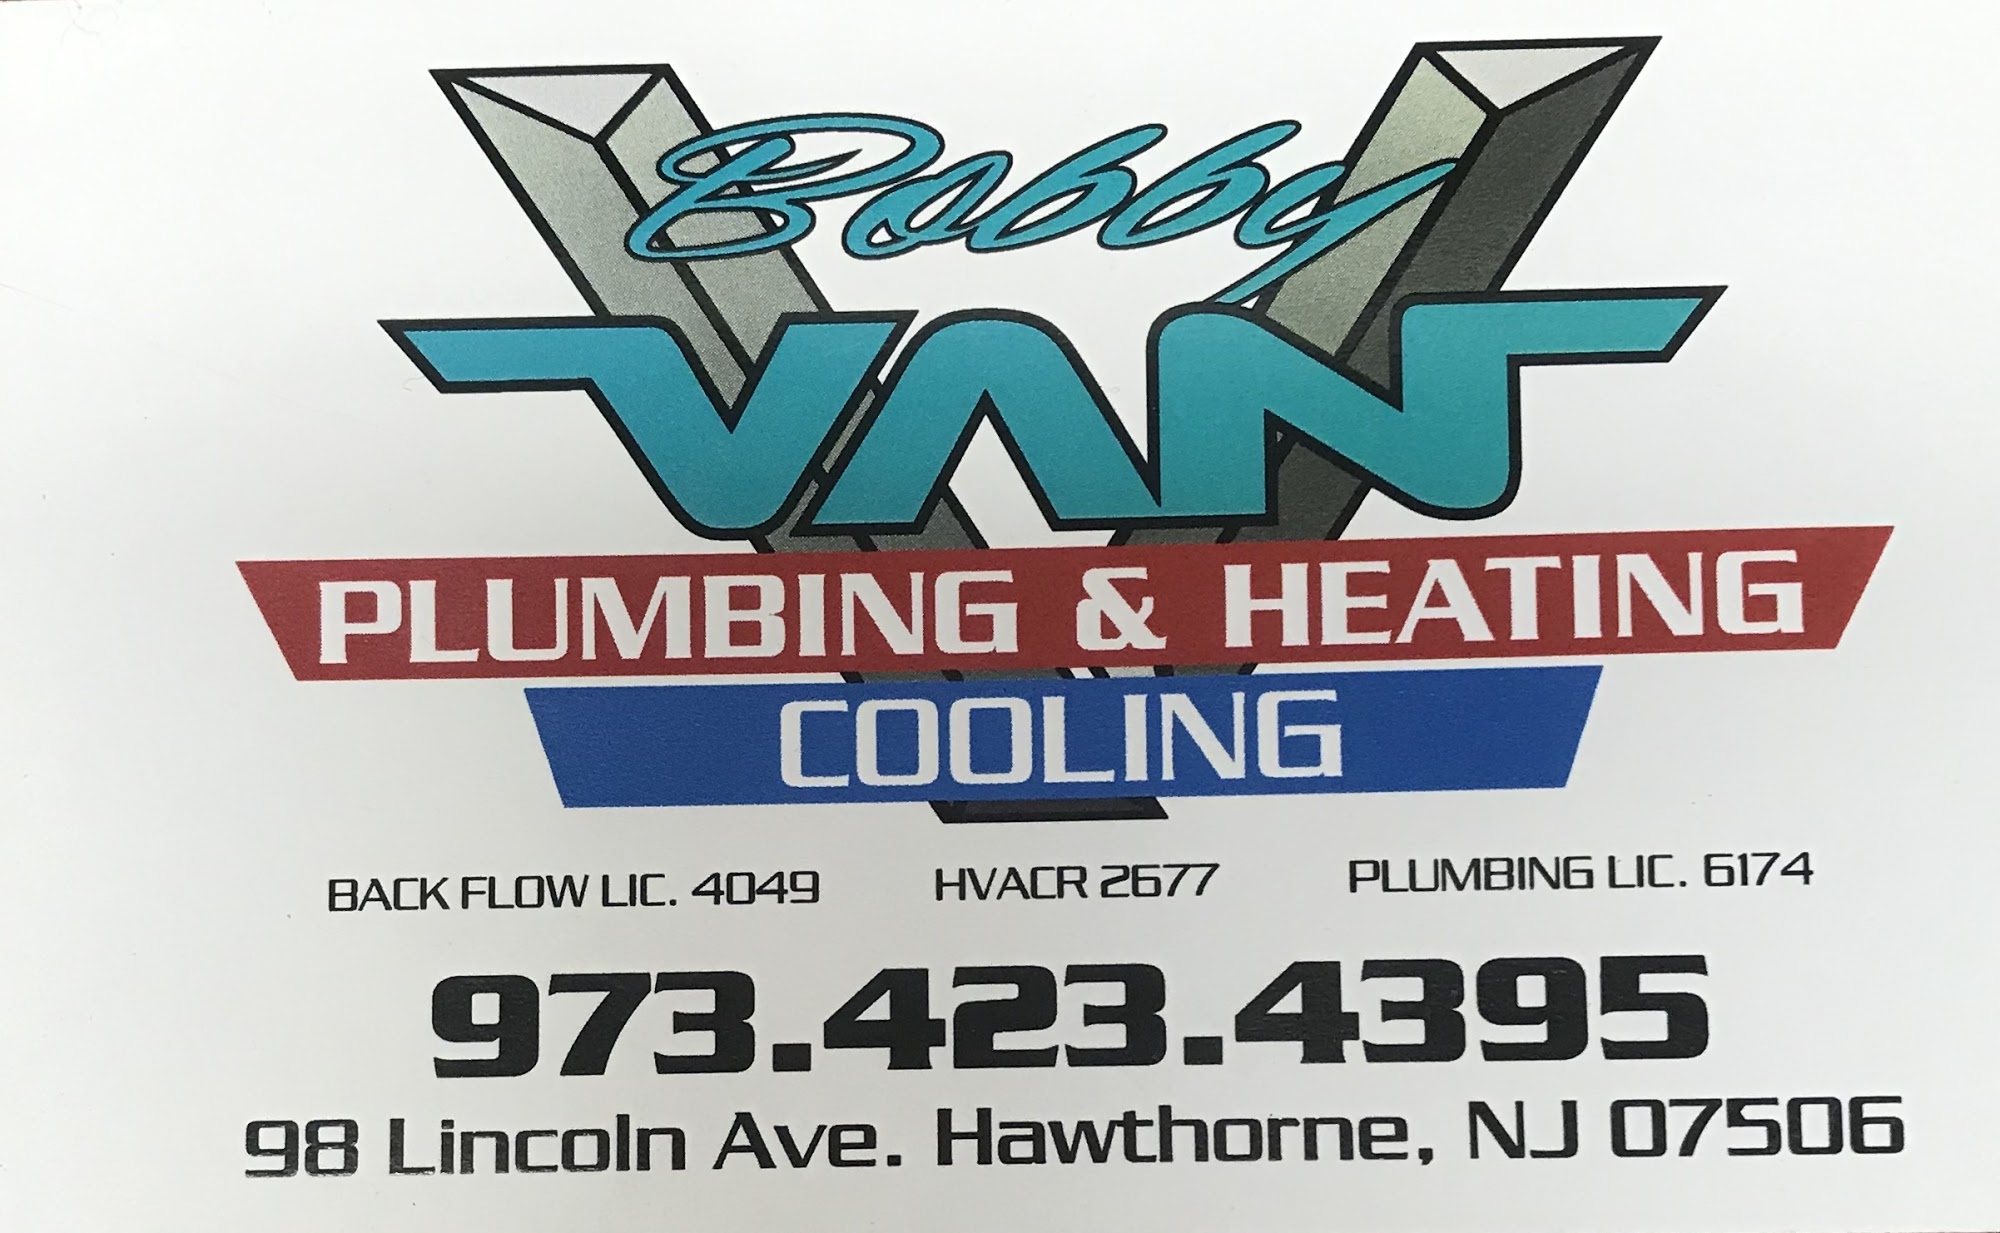 Bobby Van Plumbing, Heating & Cooling